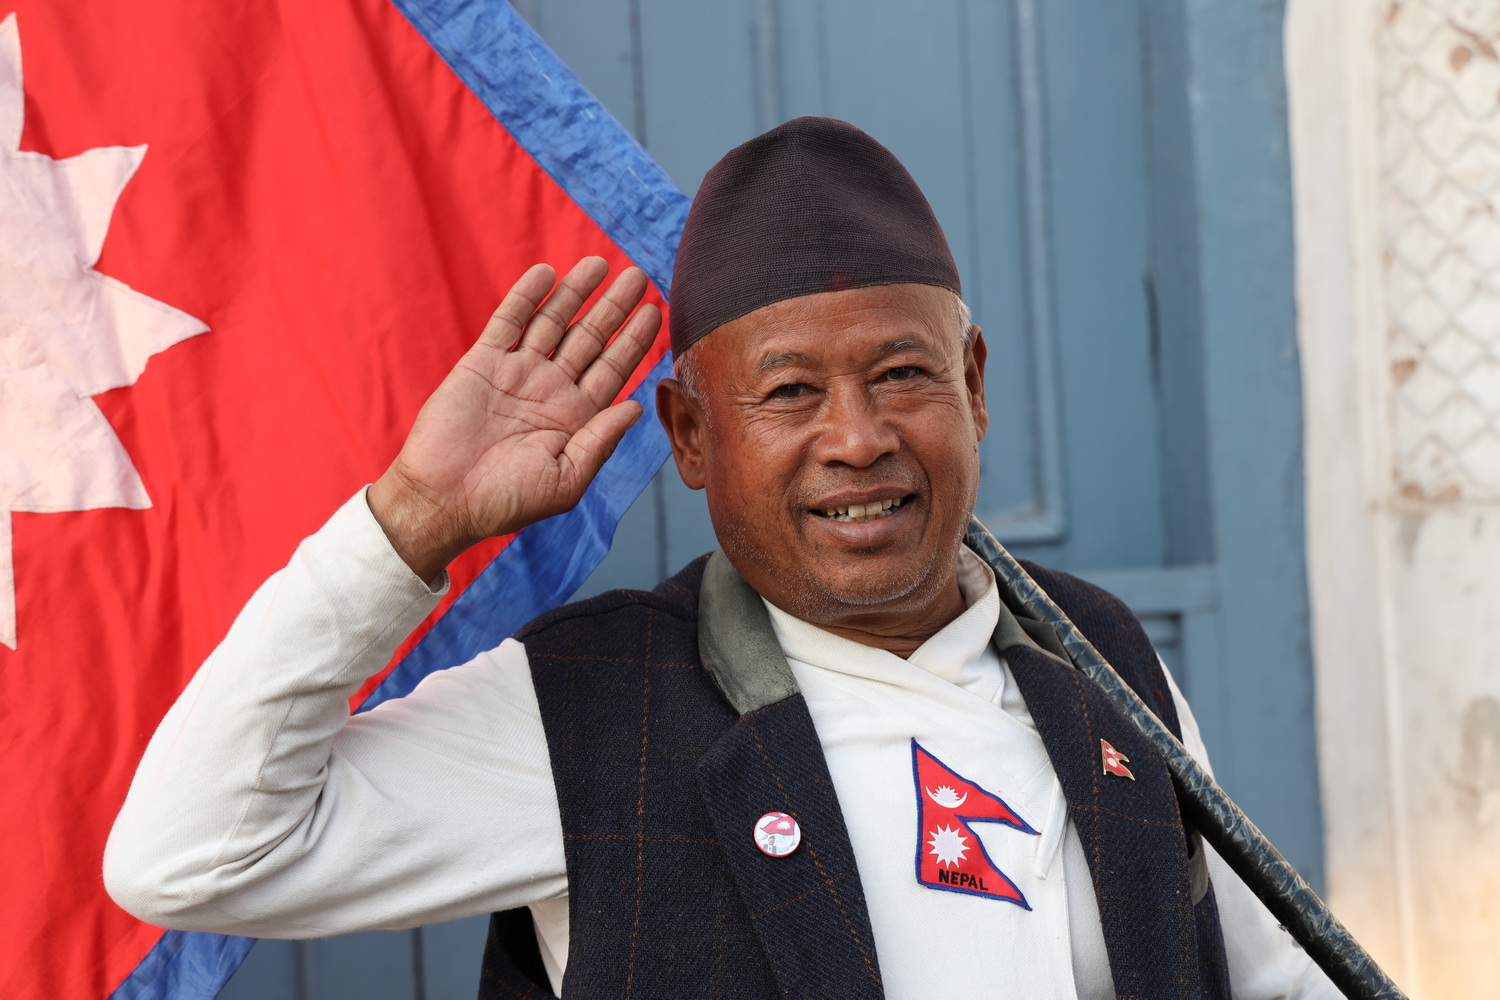 Stolzer Nepalese am Durbar Square-Kathmandu